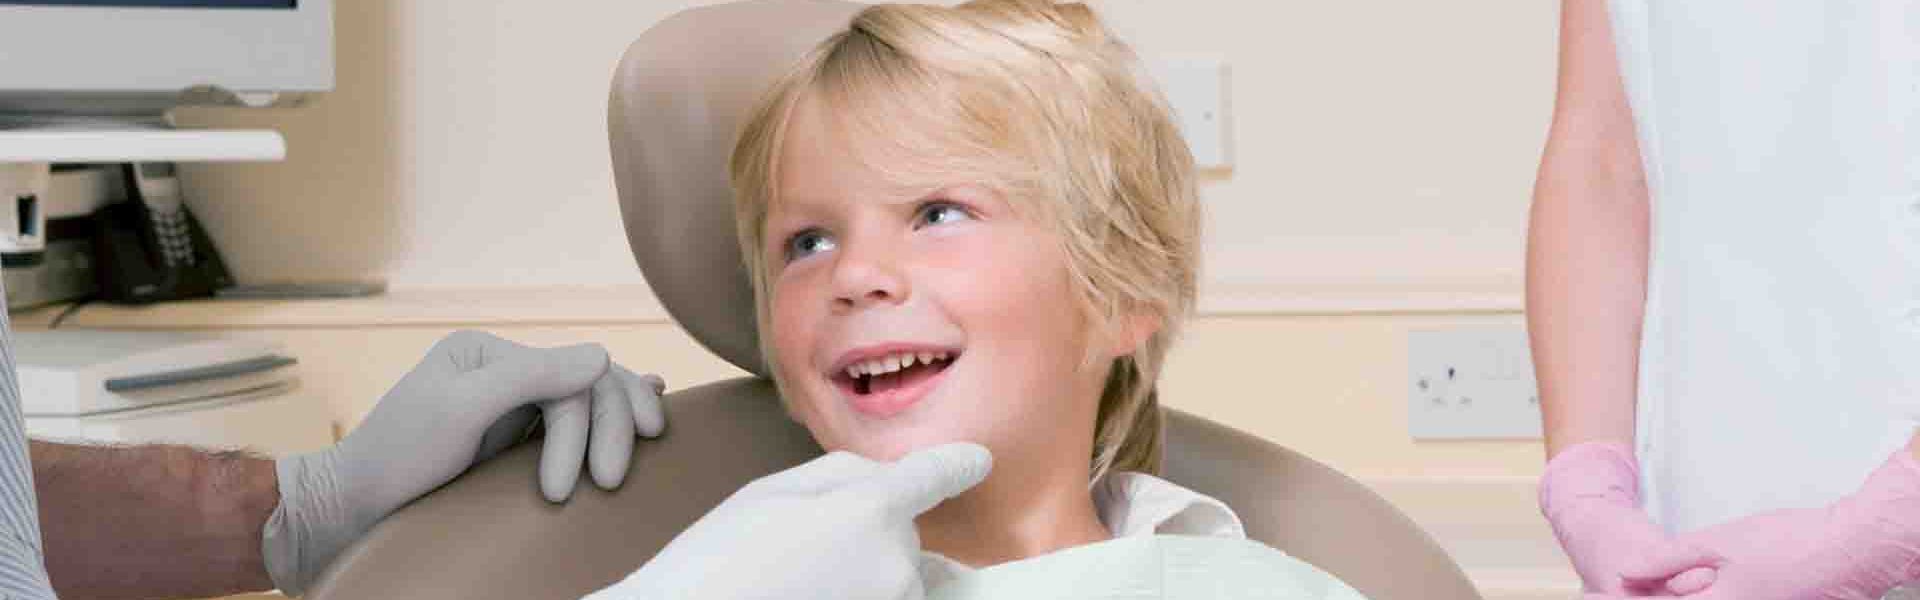 Dental Sealants for Kids